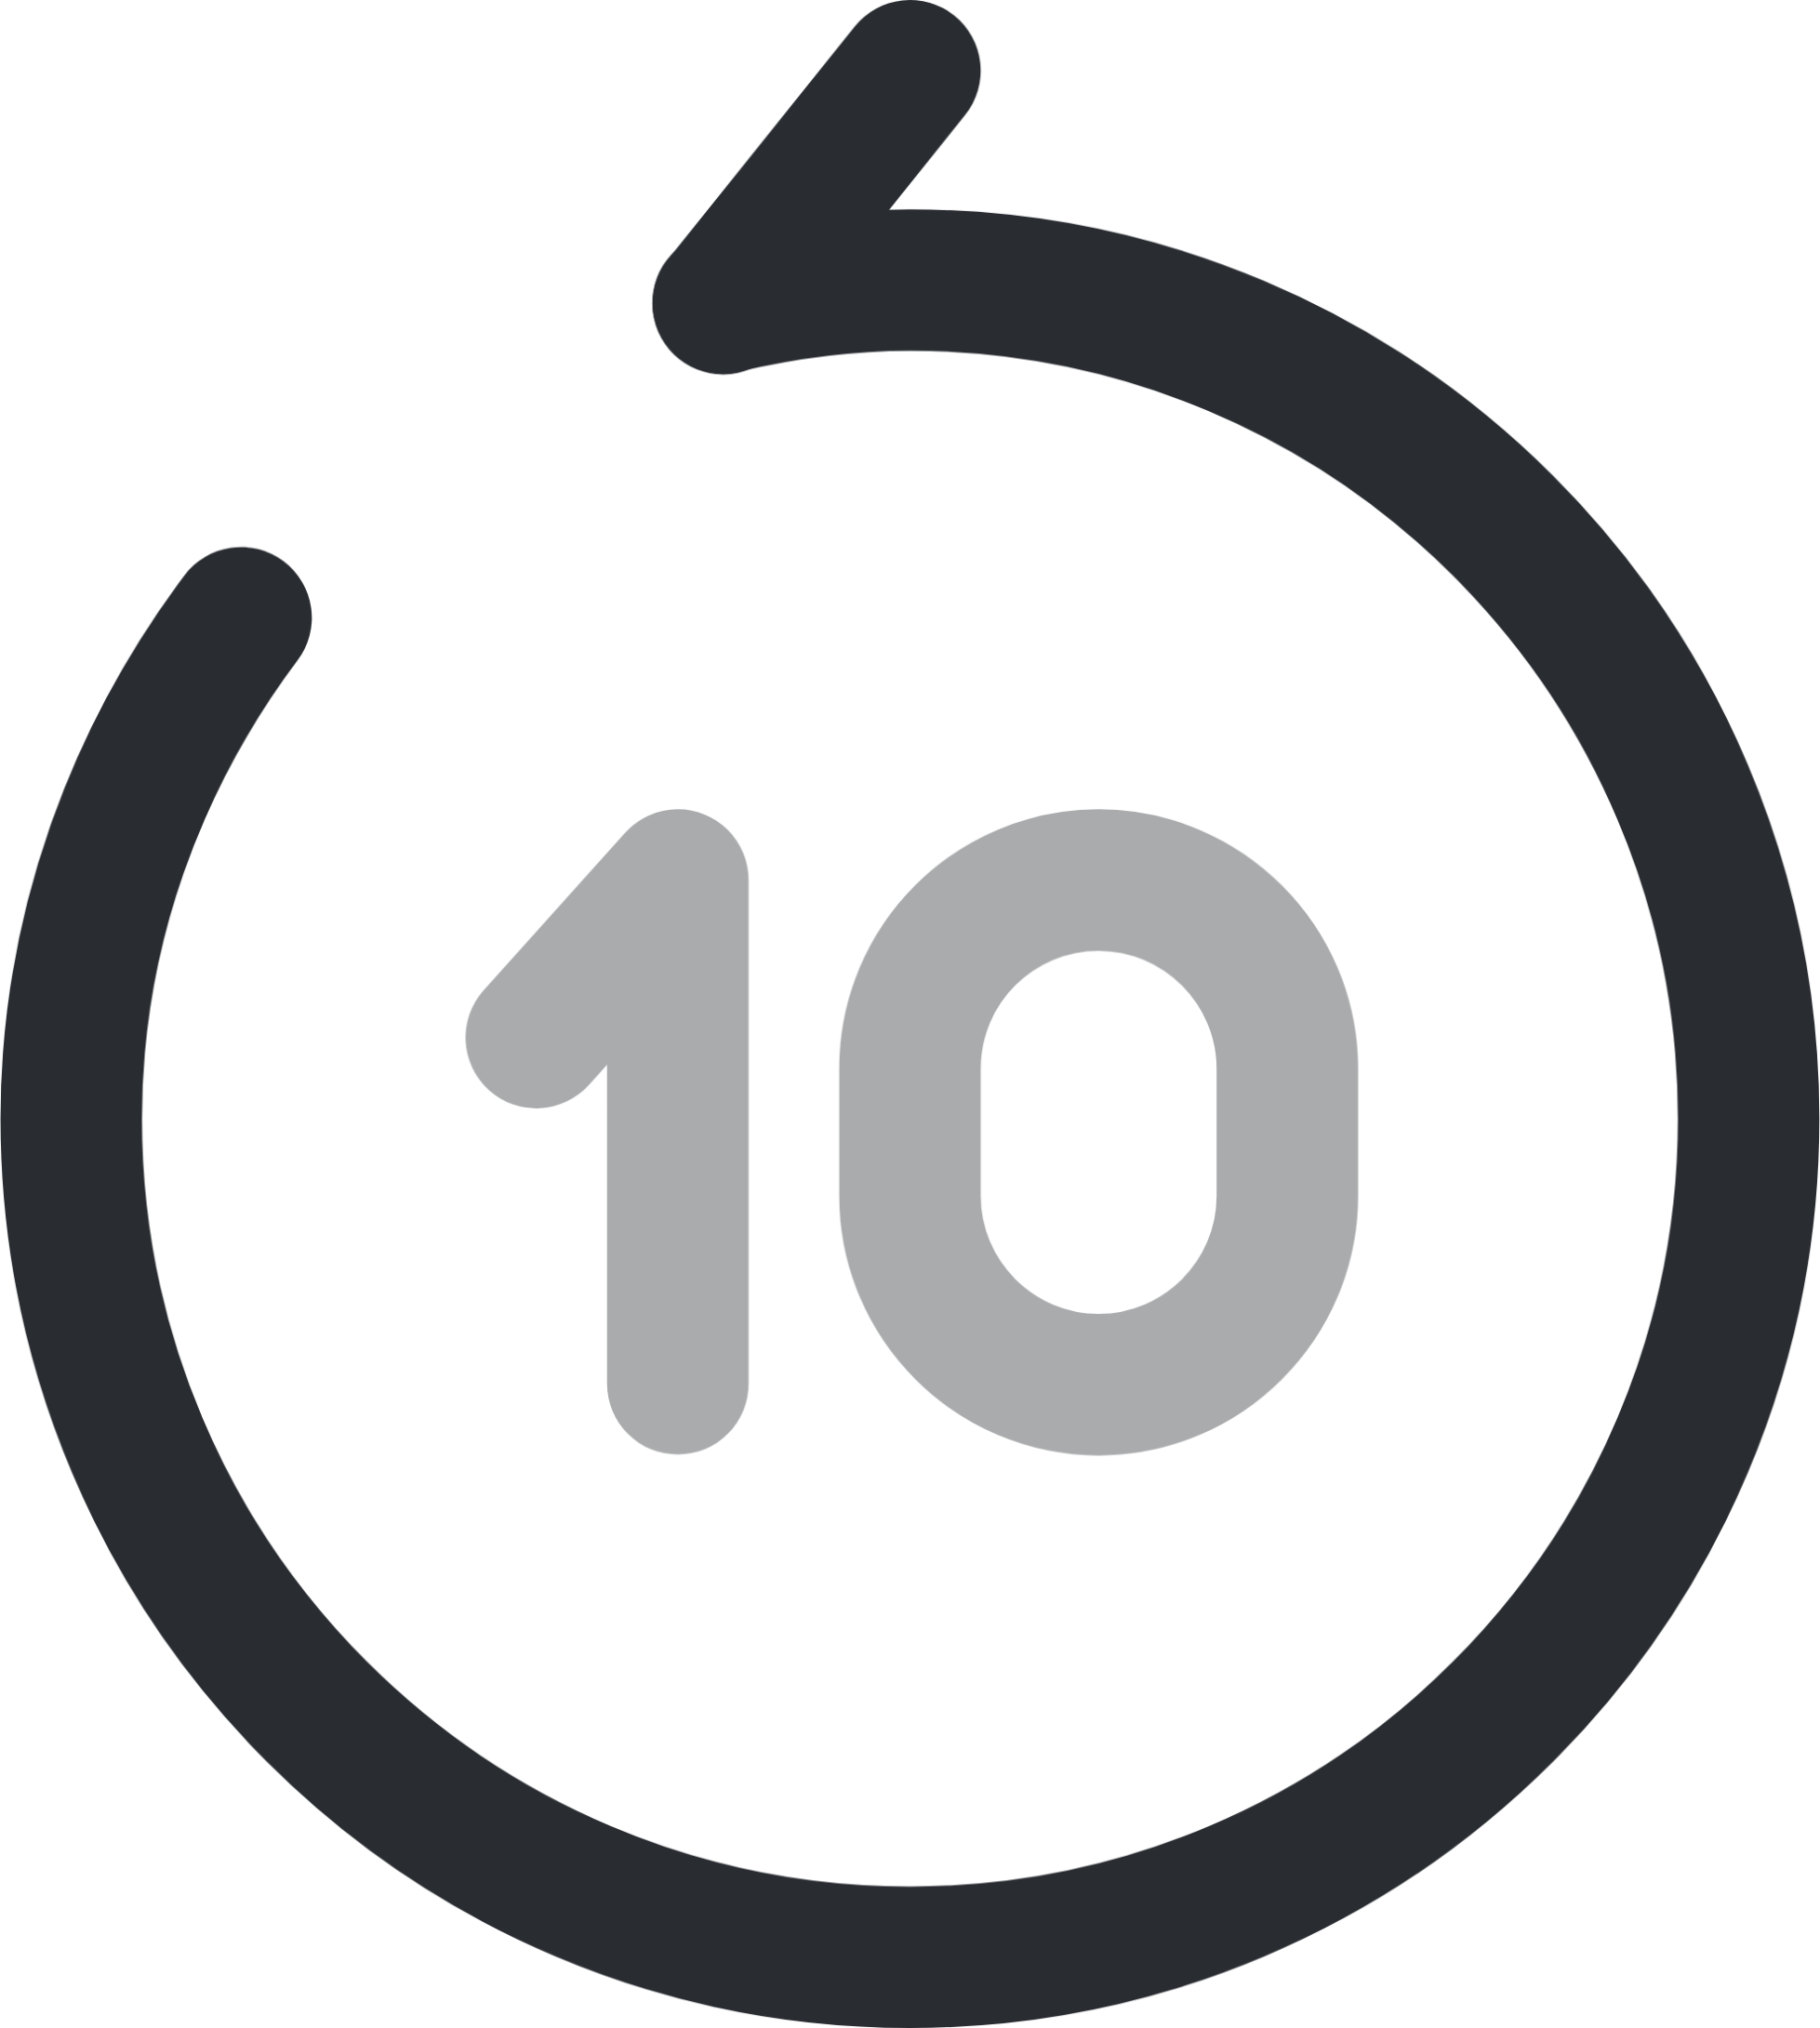 backward 10 seconds icon